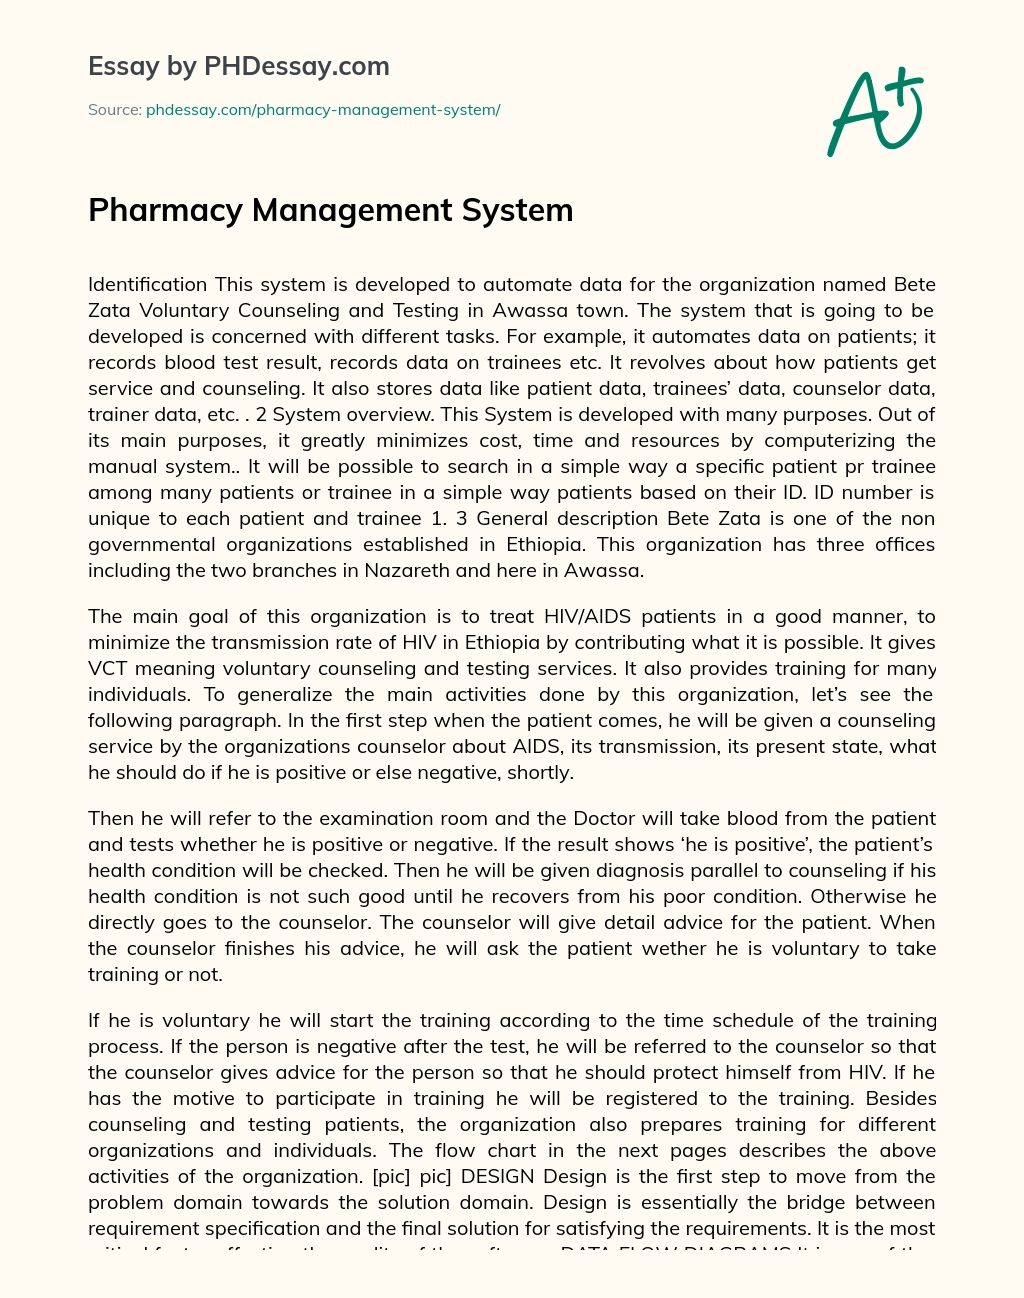 Pharmacy Management System essay